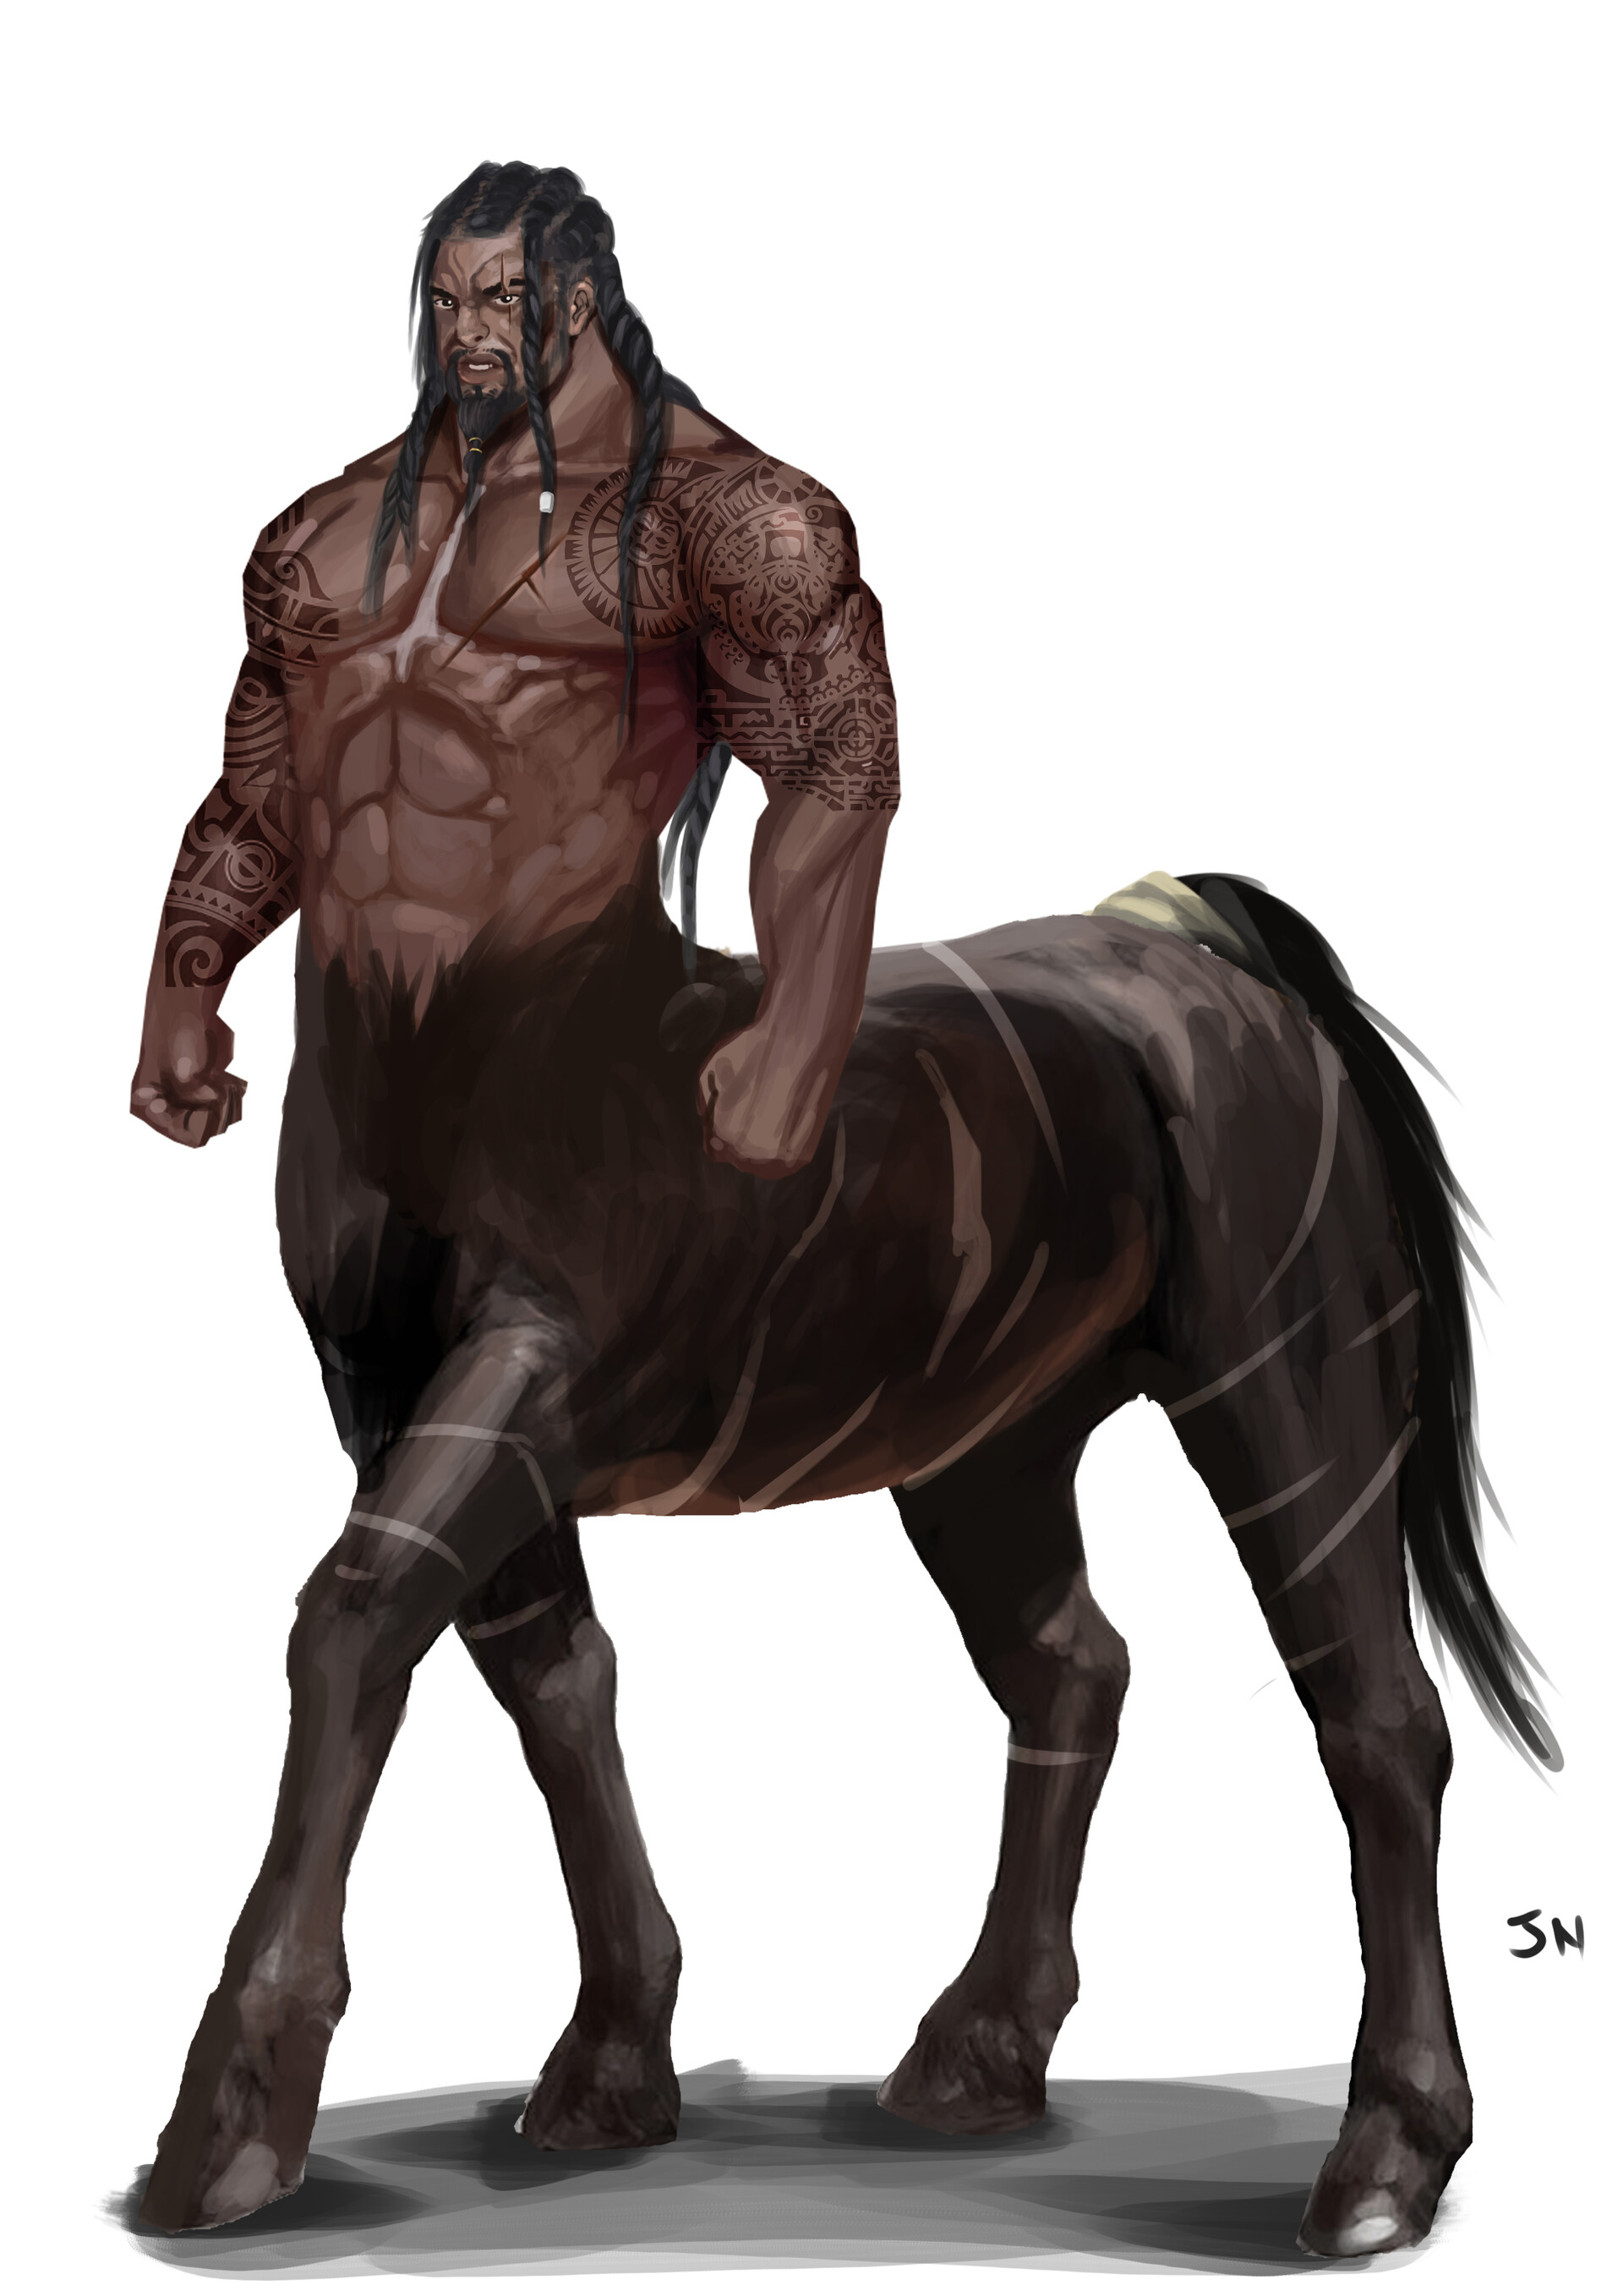 The Centaur in My Dreams: Fallen Centaurs (Coveted Prey)